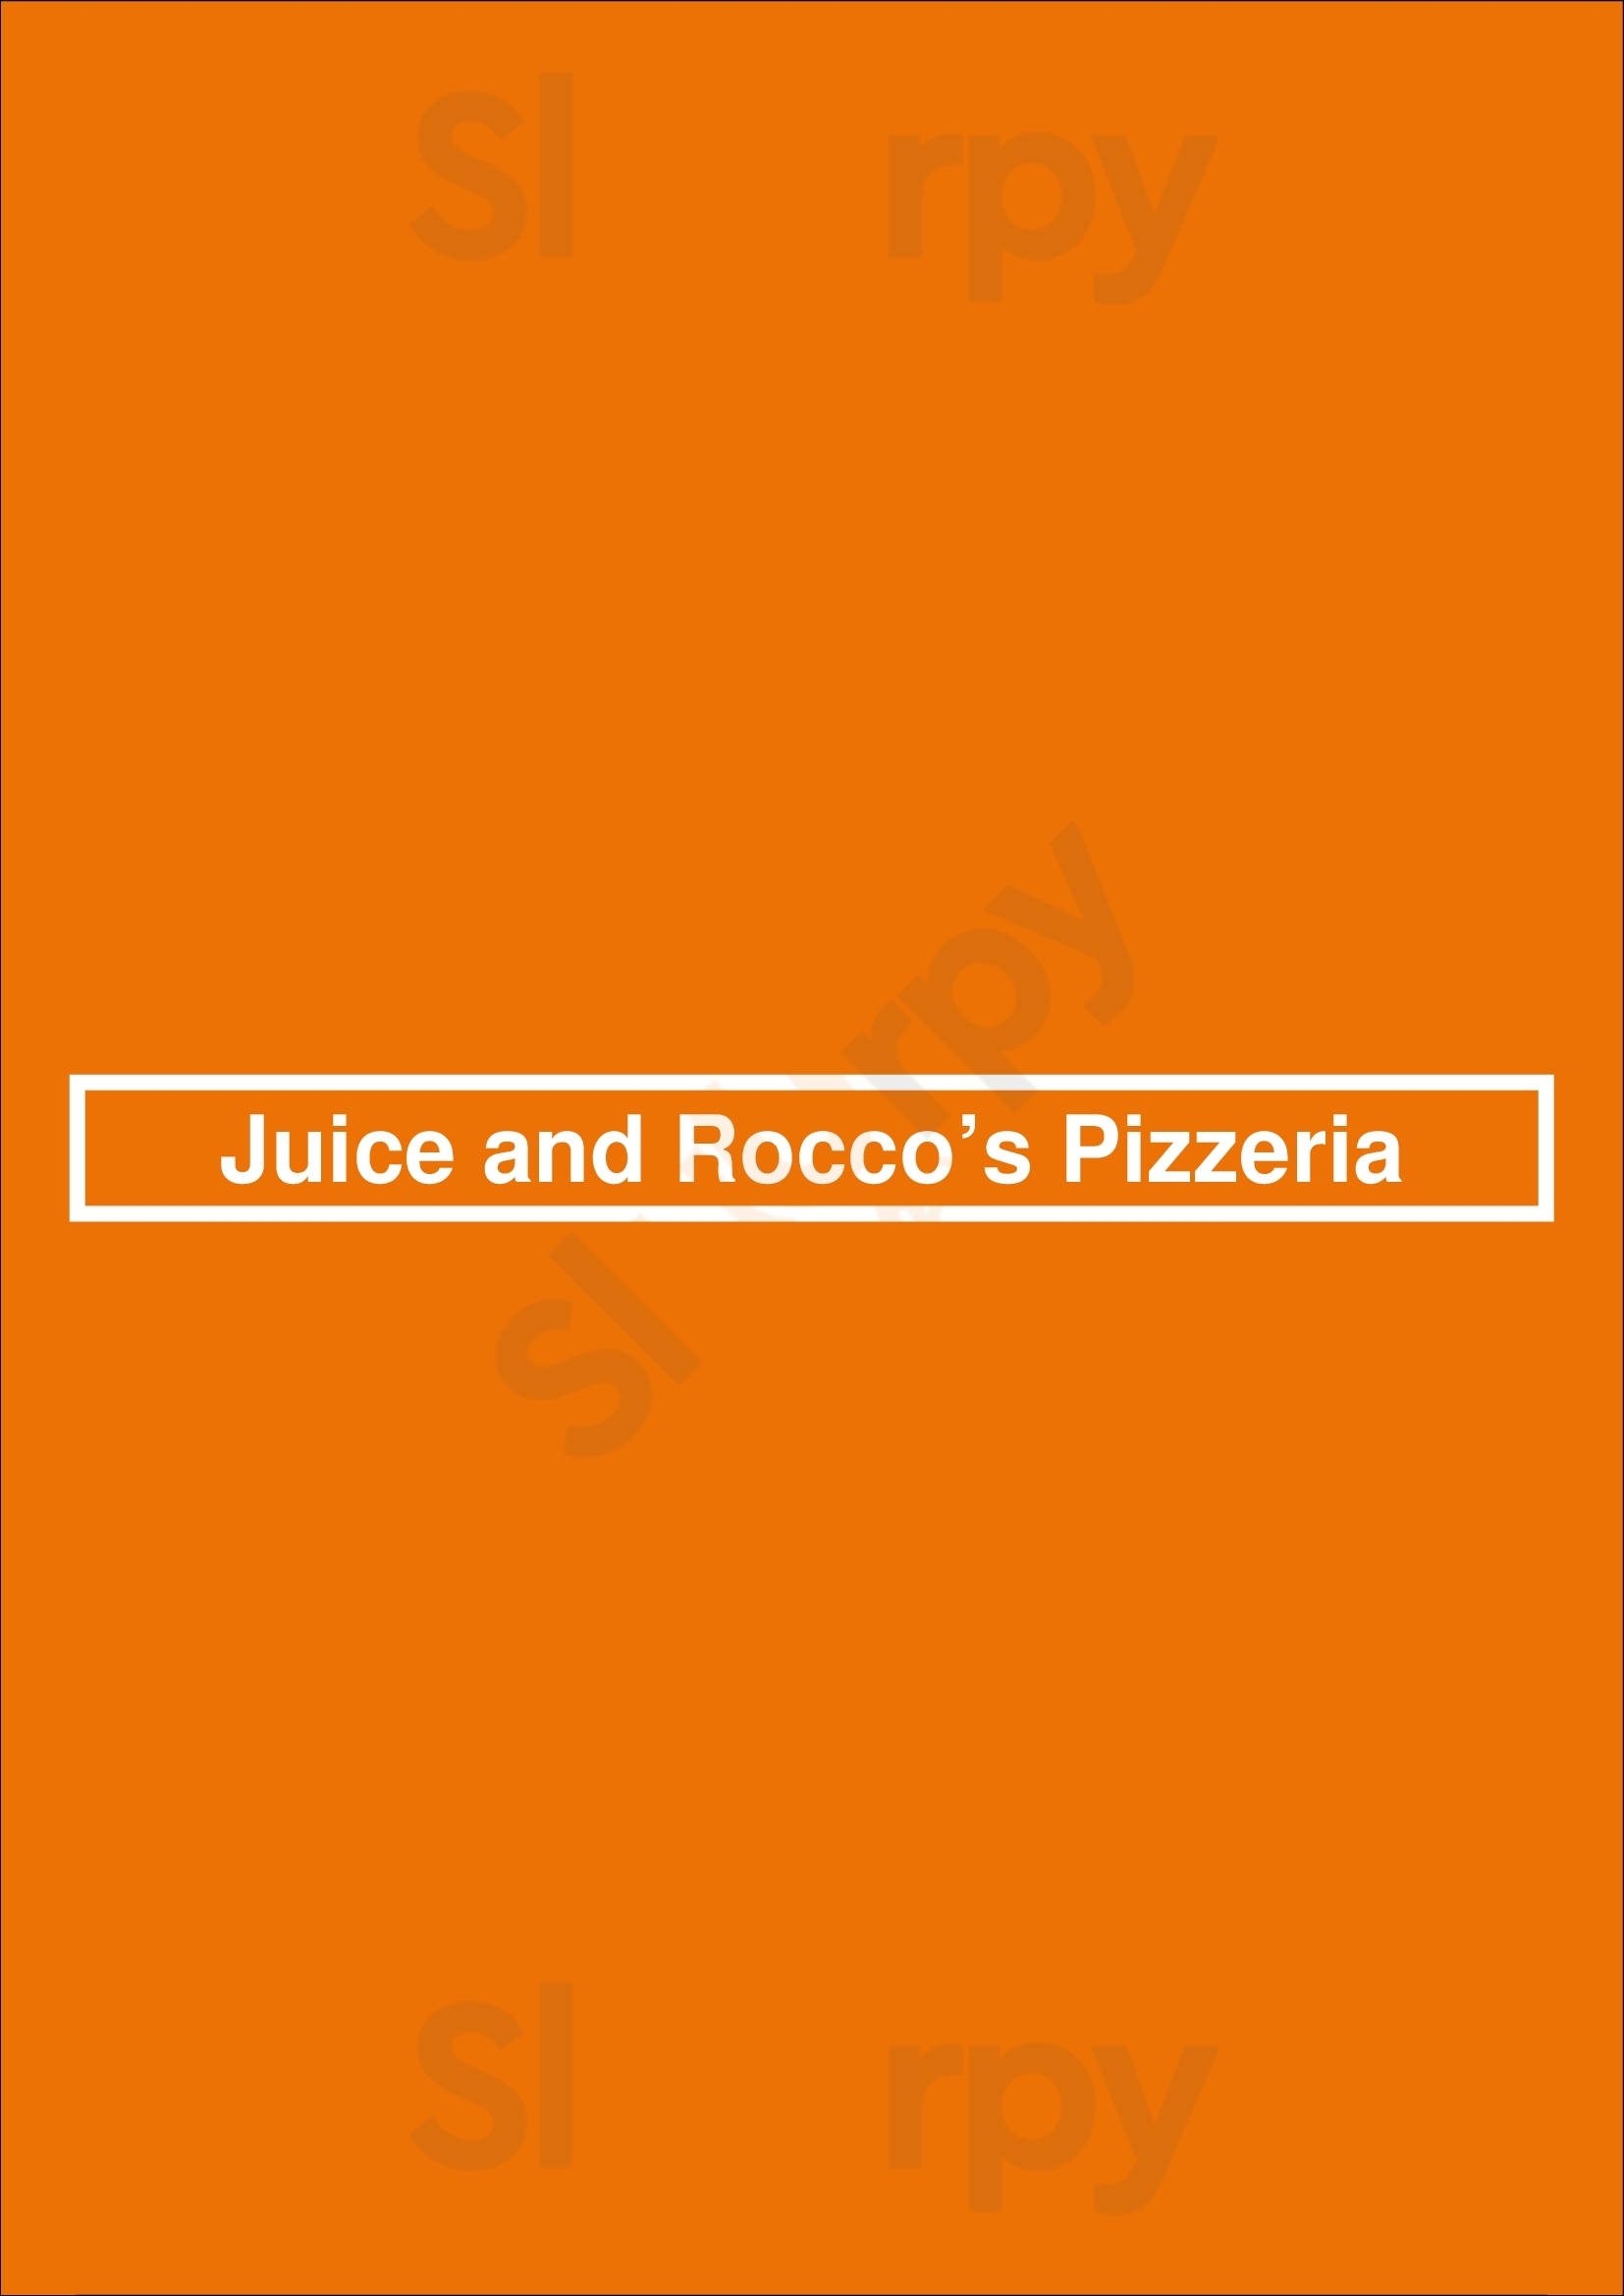 Juice And Rocco’s Pizzeria Brampton Menu - 1